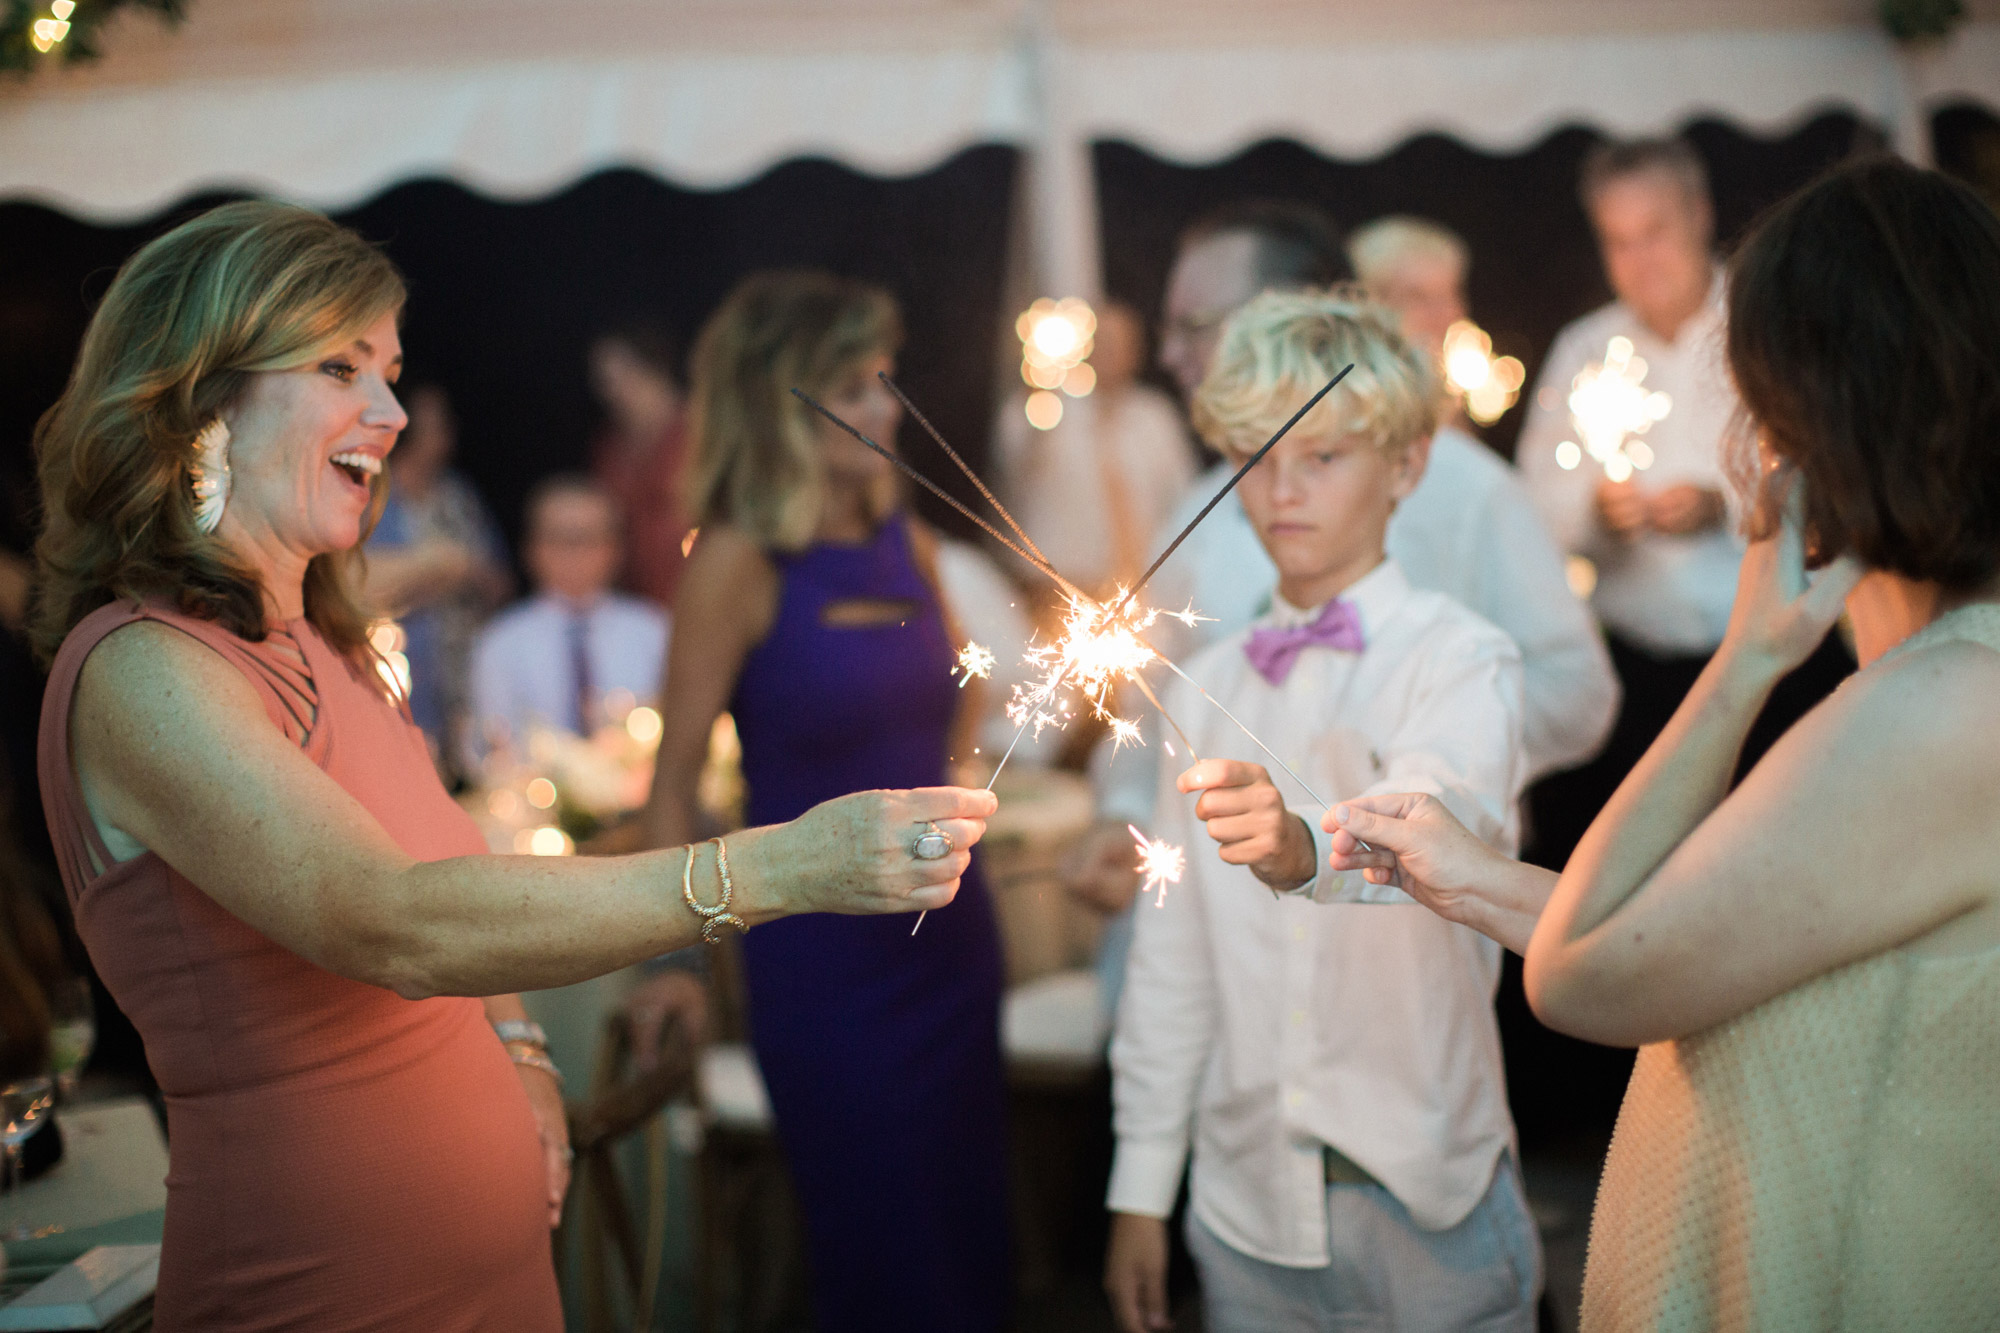 Wedding at Lion Rock Farm in Sharon, Connecticut.  Photos by Kelly Kollar Photography.